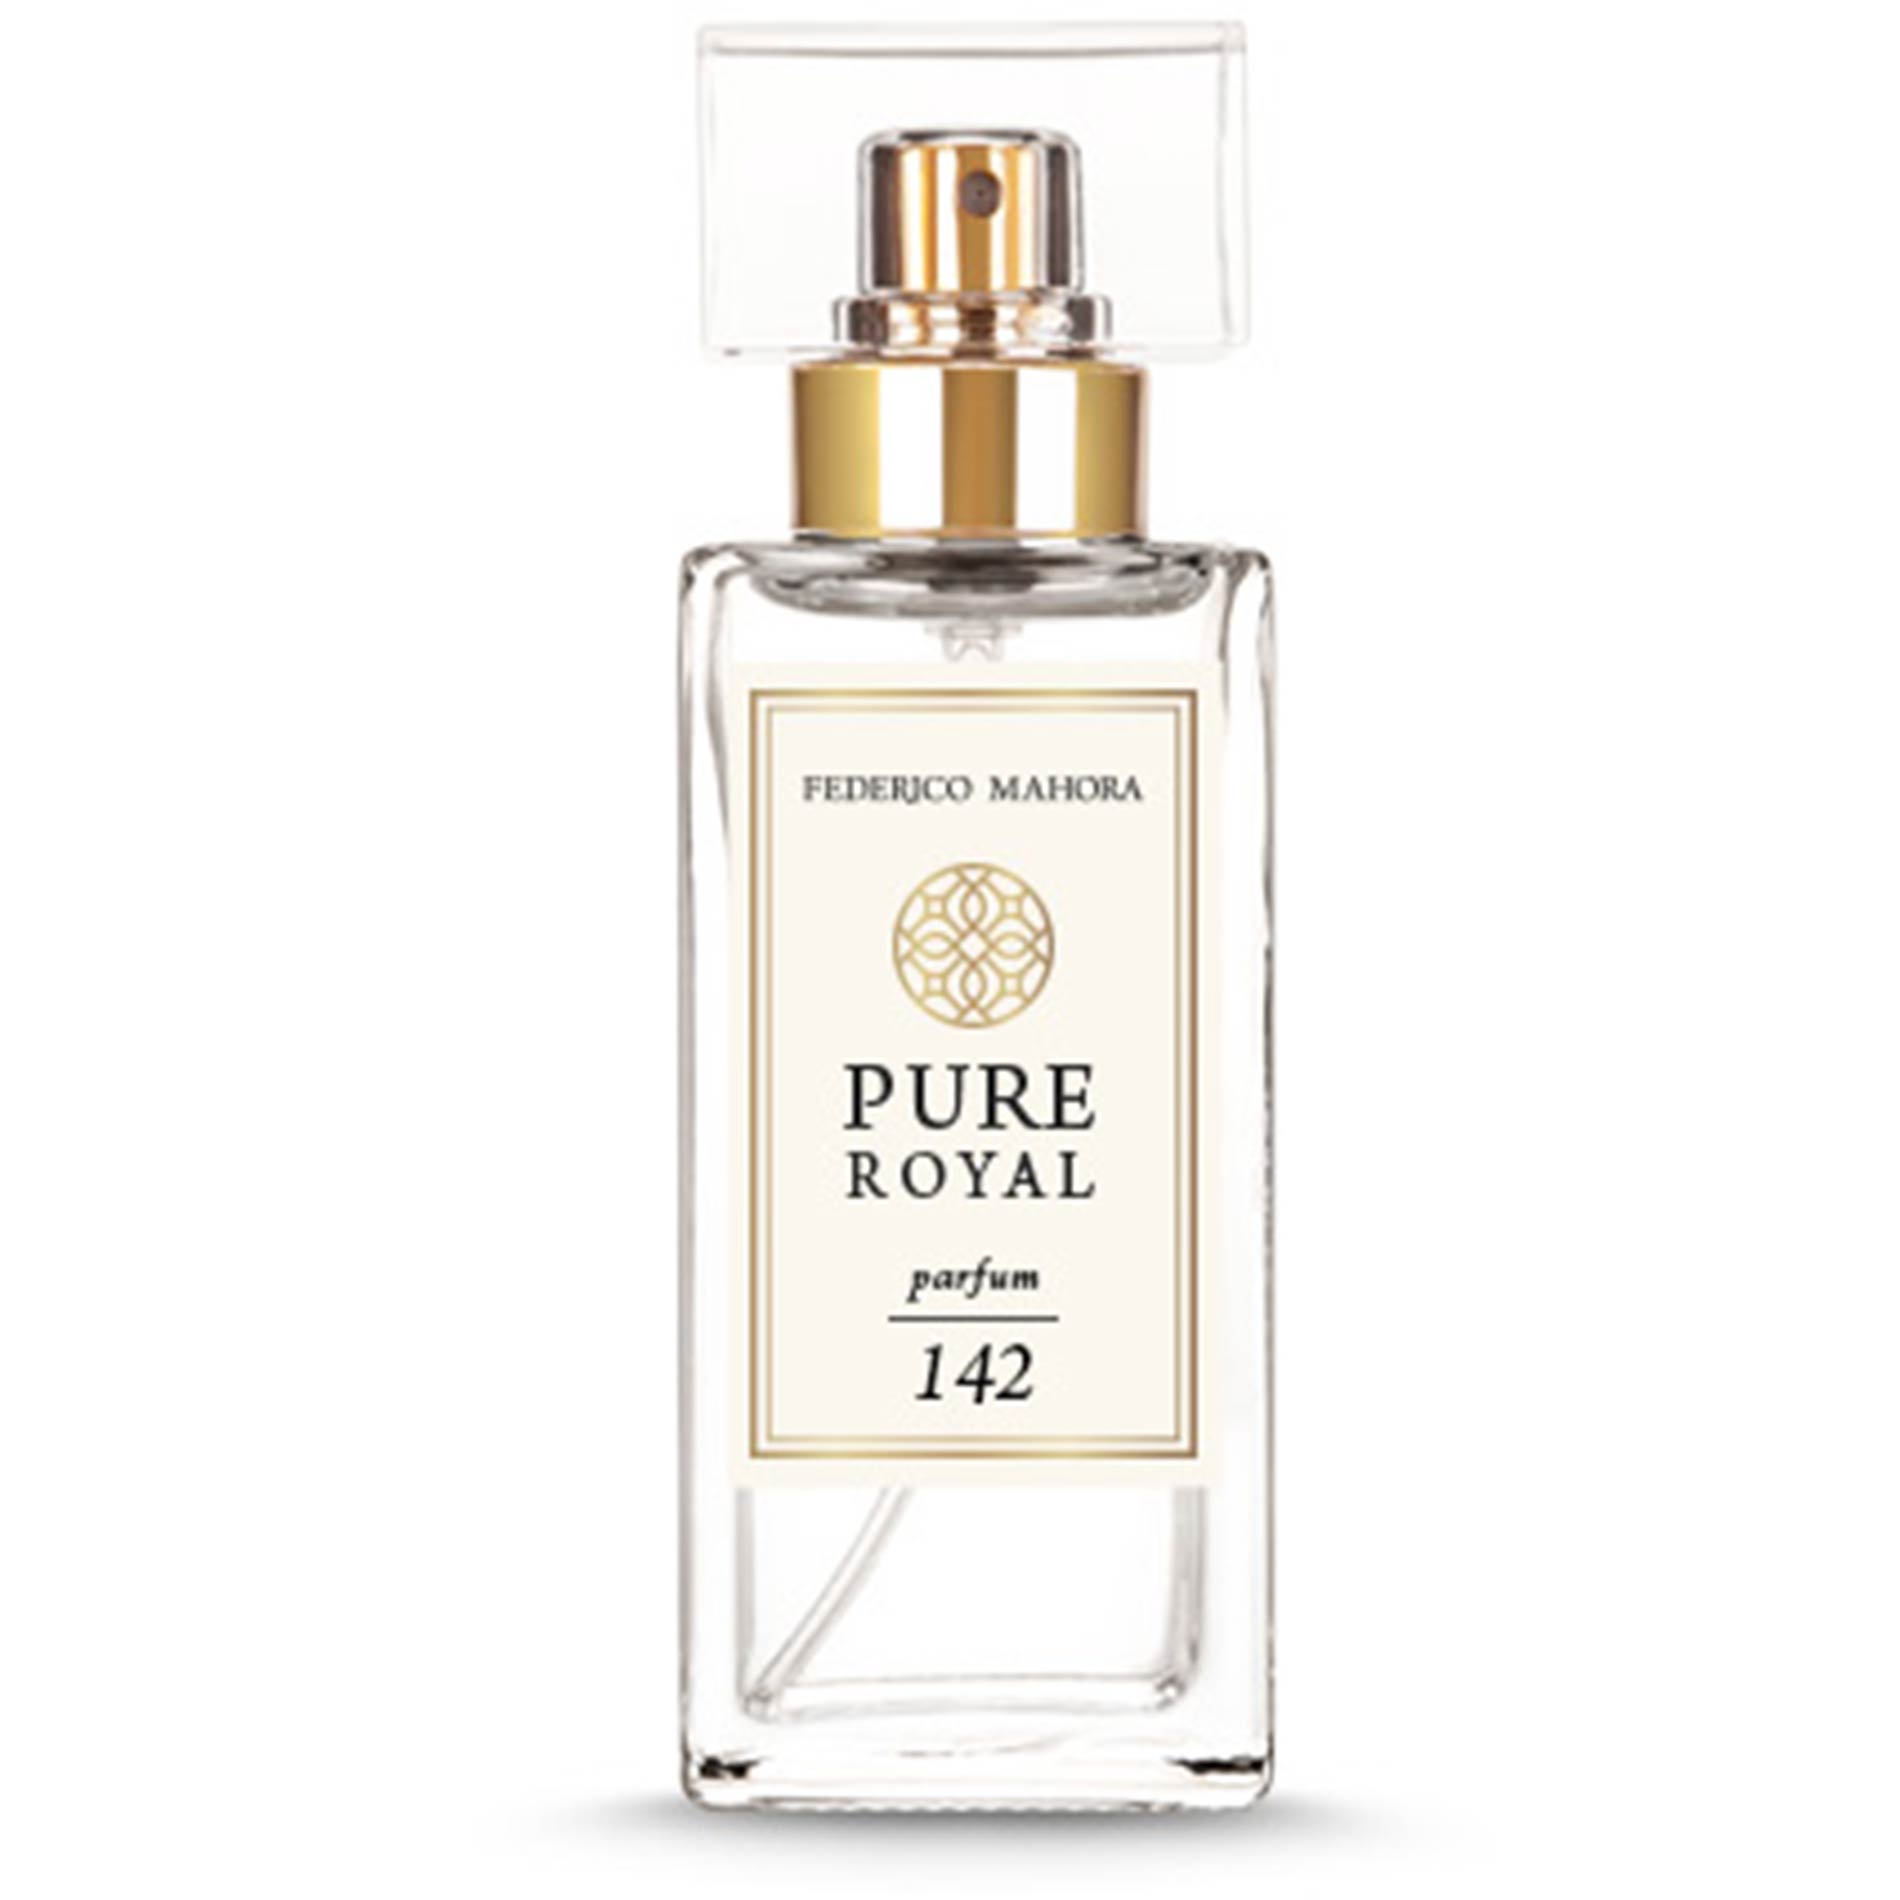 federico pure royal 142 parfum